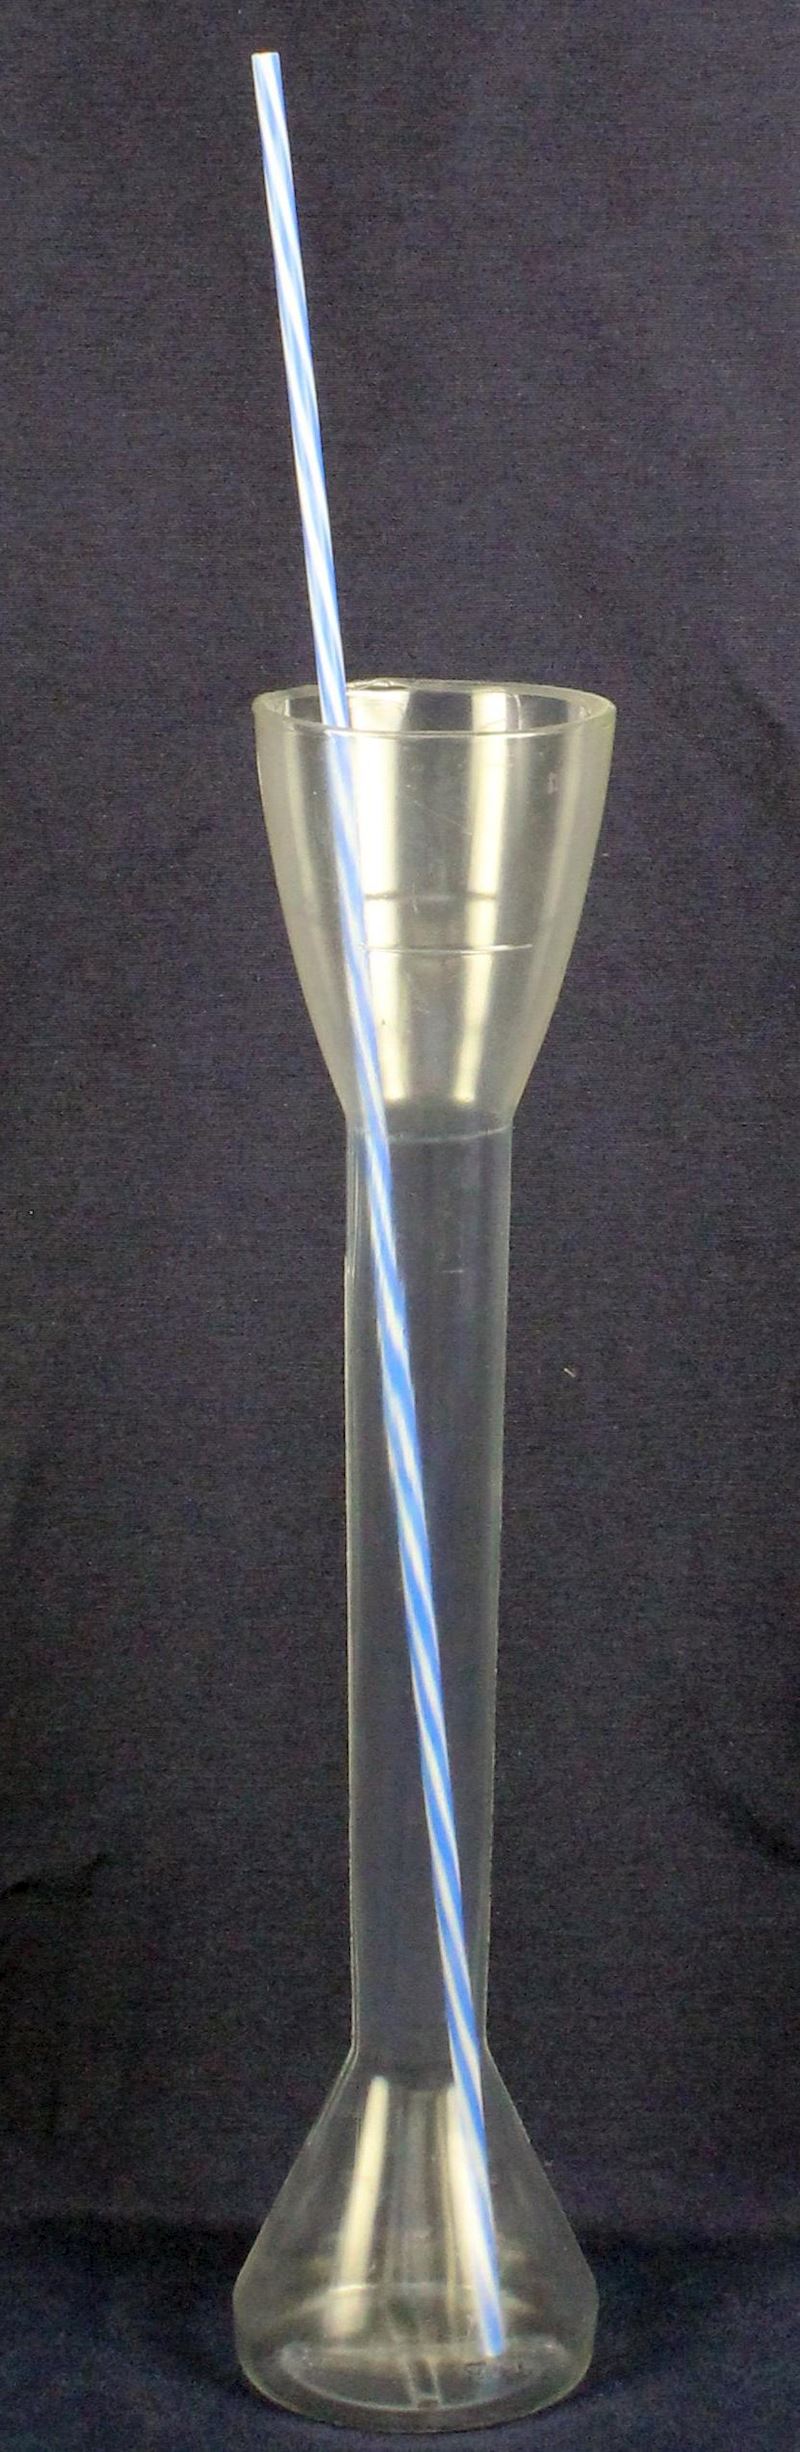 Trinkhalm 55cm blau/weiss (Becher hat Nr. 53486)